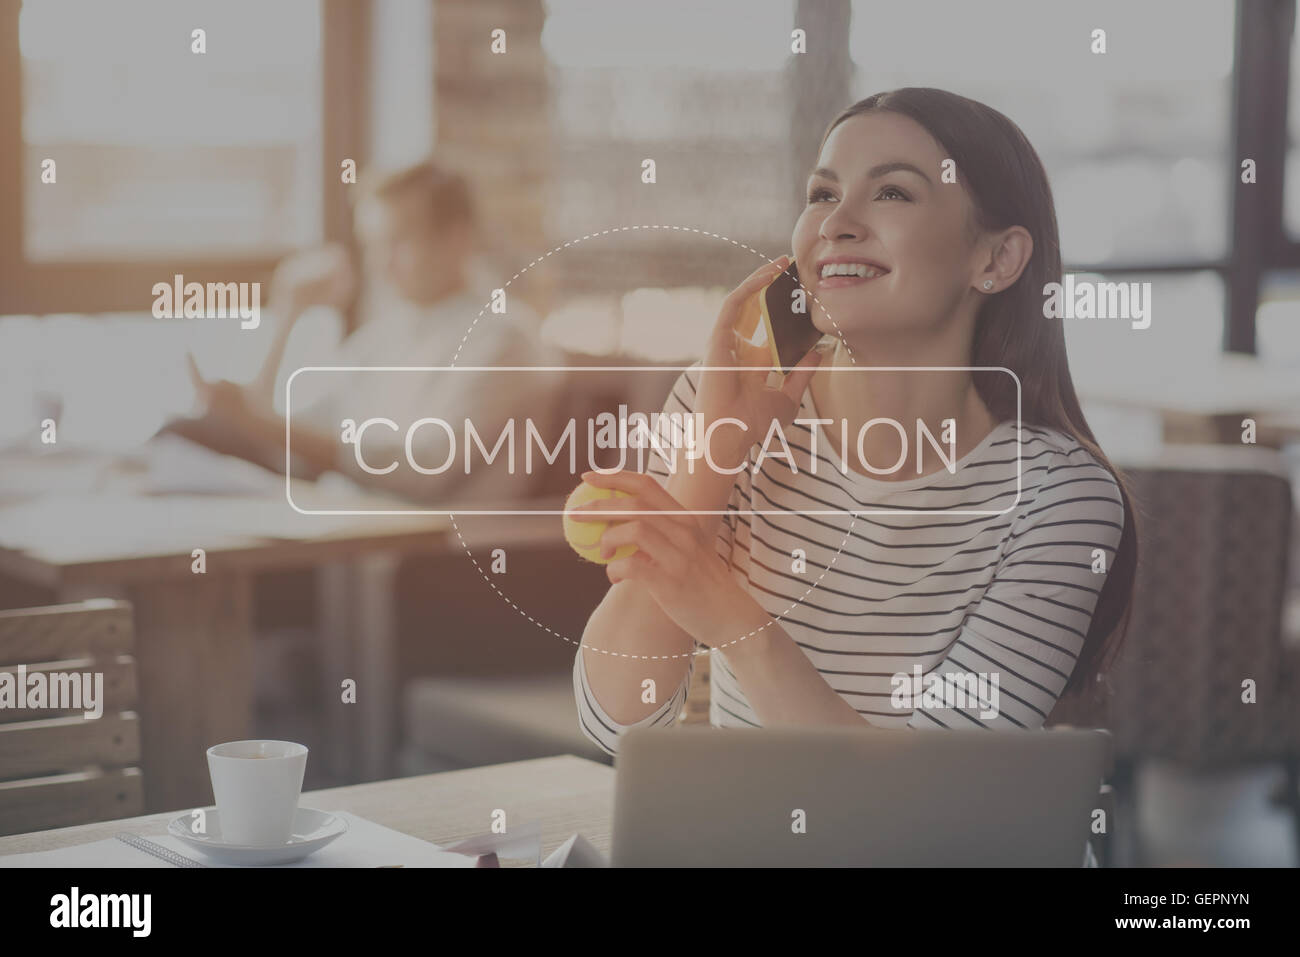 Modern communication concept Stock Photo